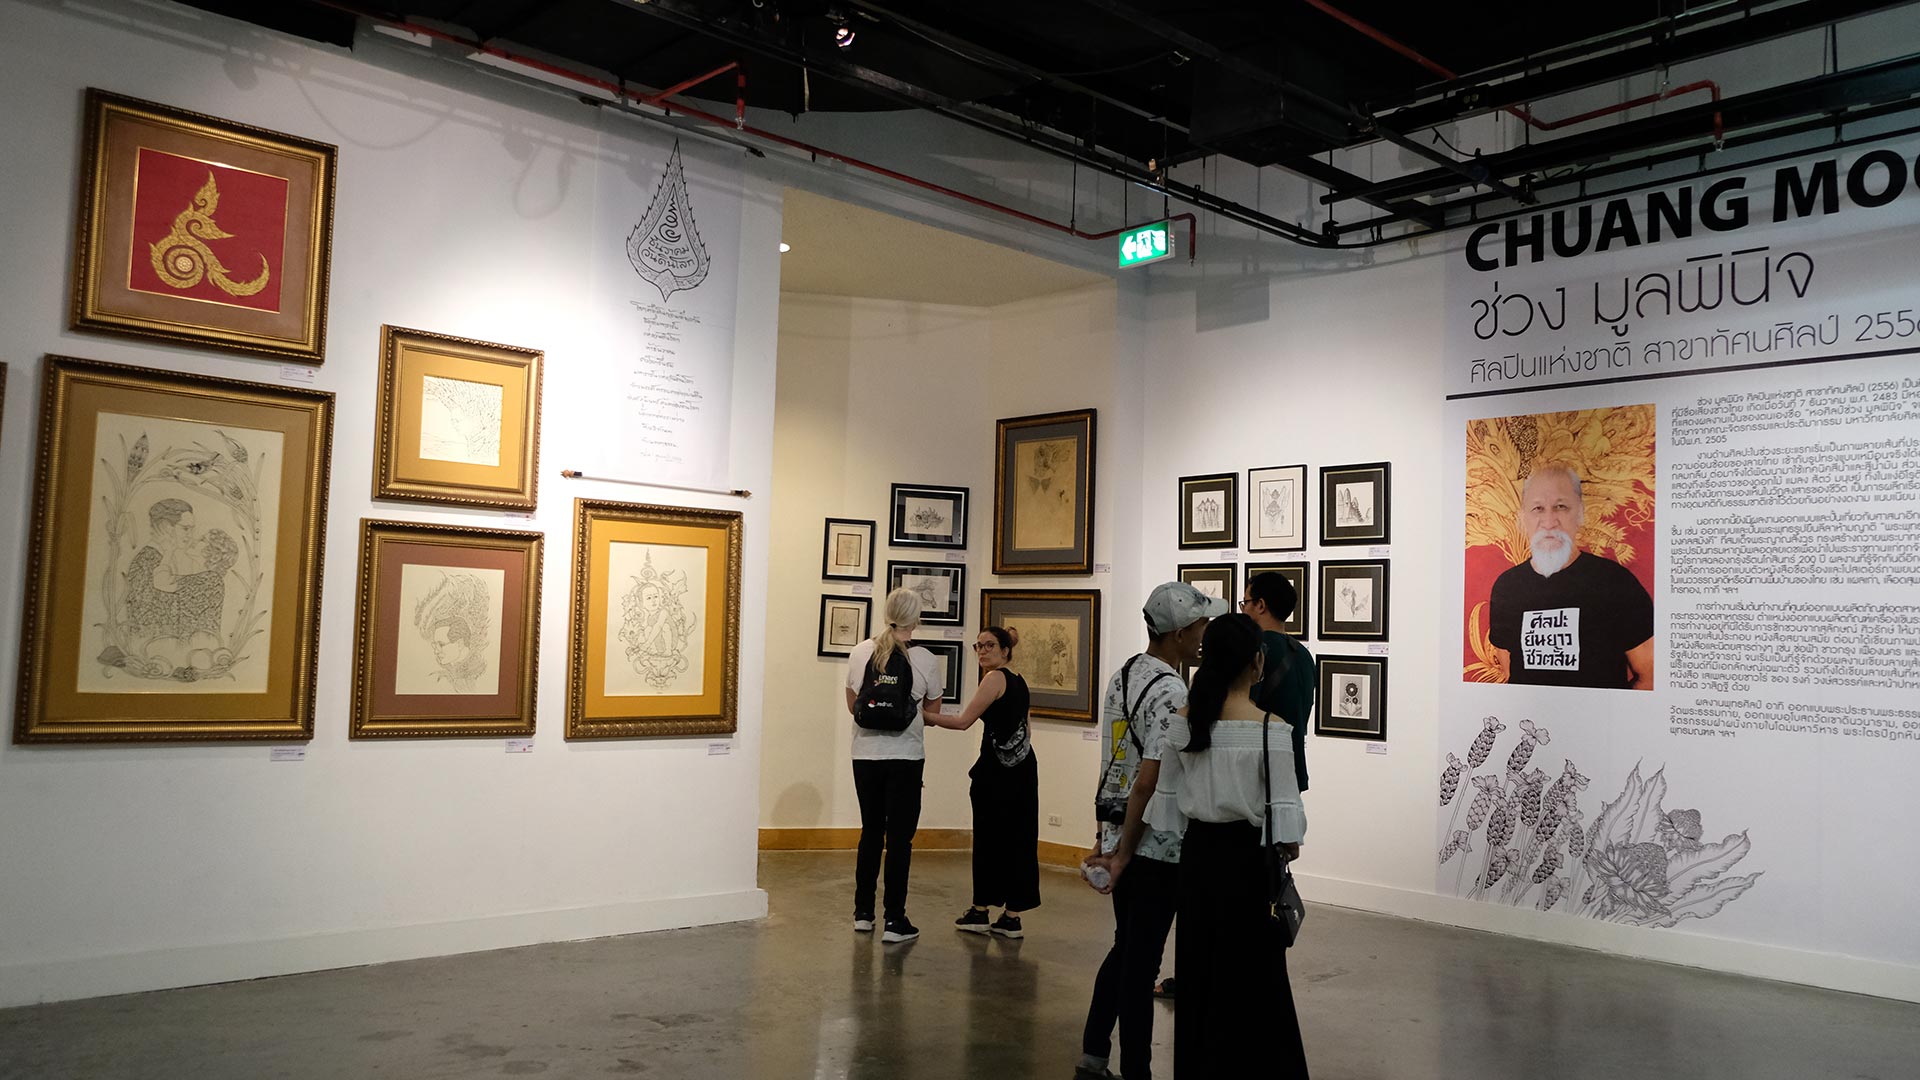 Exhibitions Twilight Zone 2 Exhibition By Chuang Munpinij | นิทรรศการ แดนสนธยา ๒ โดย ช่วง มูลพินิจ